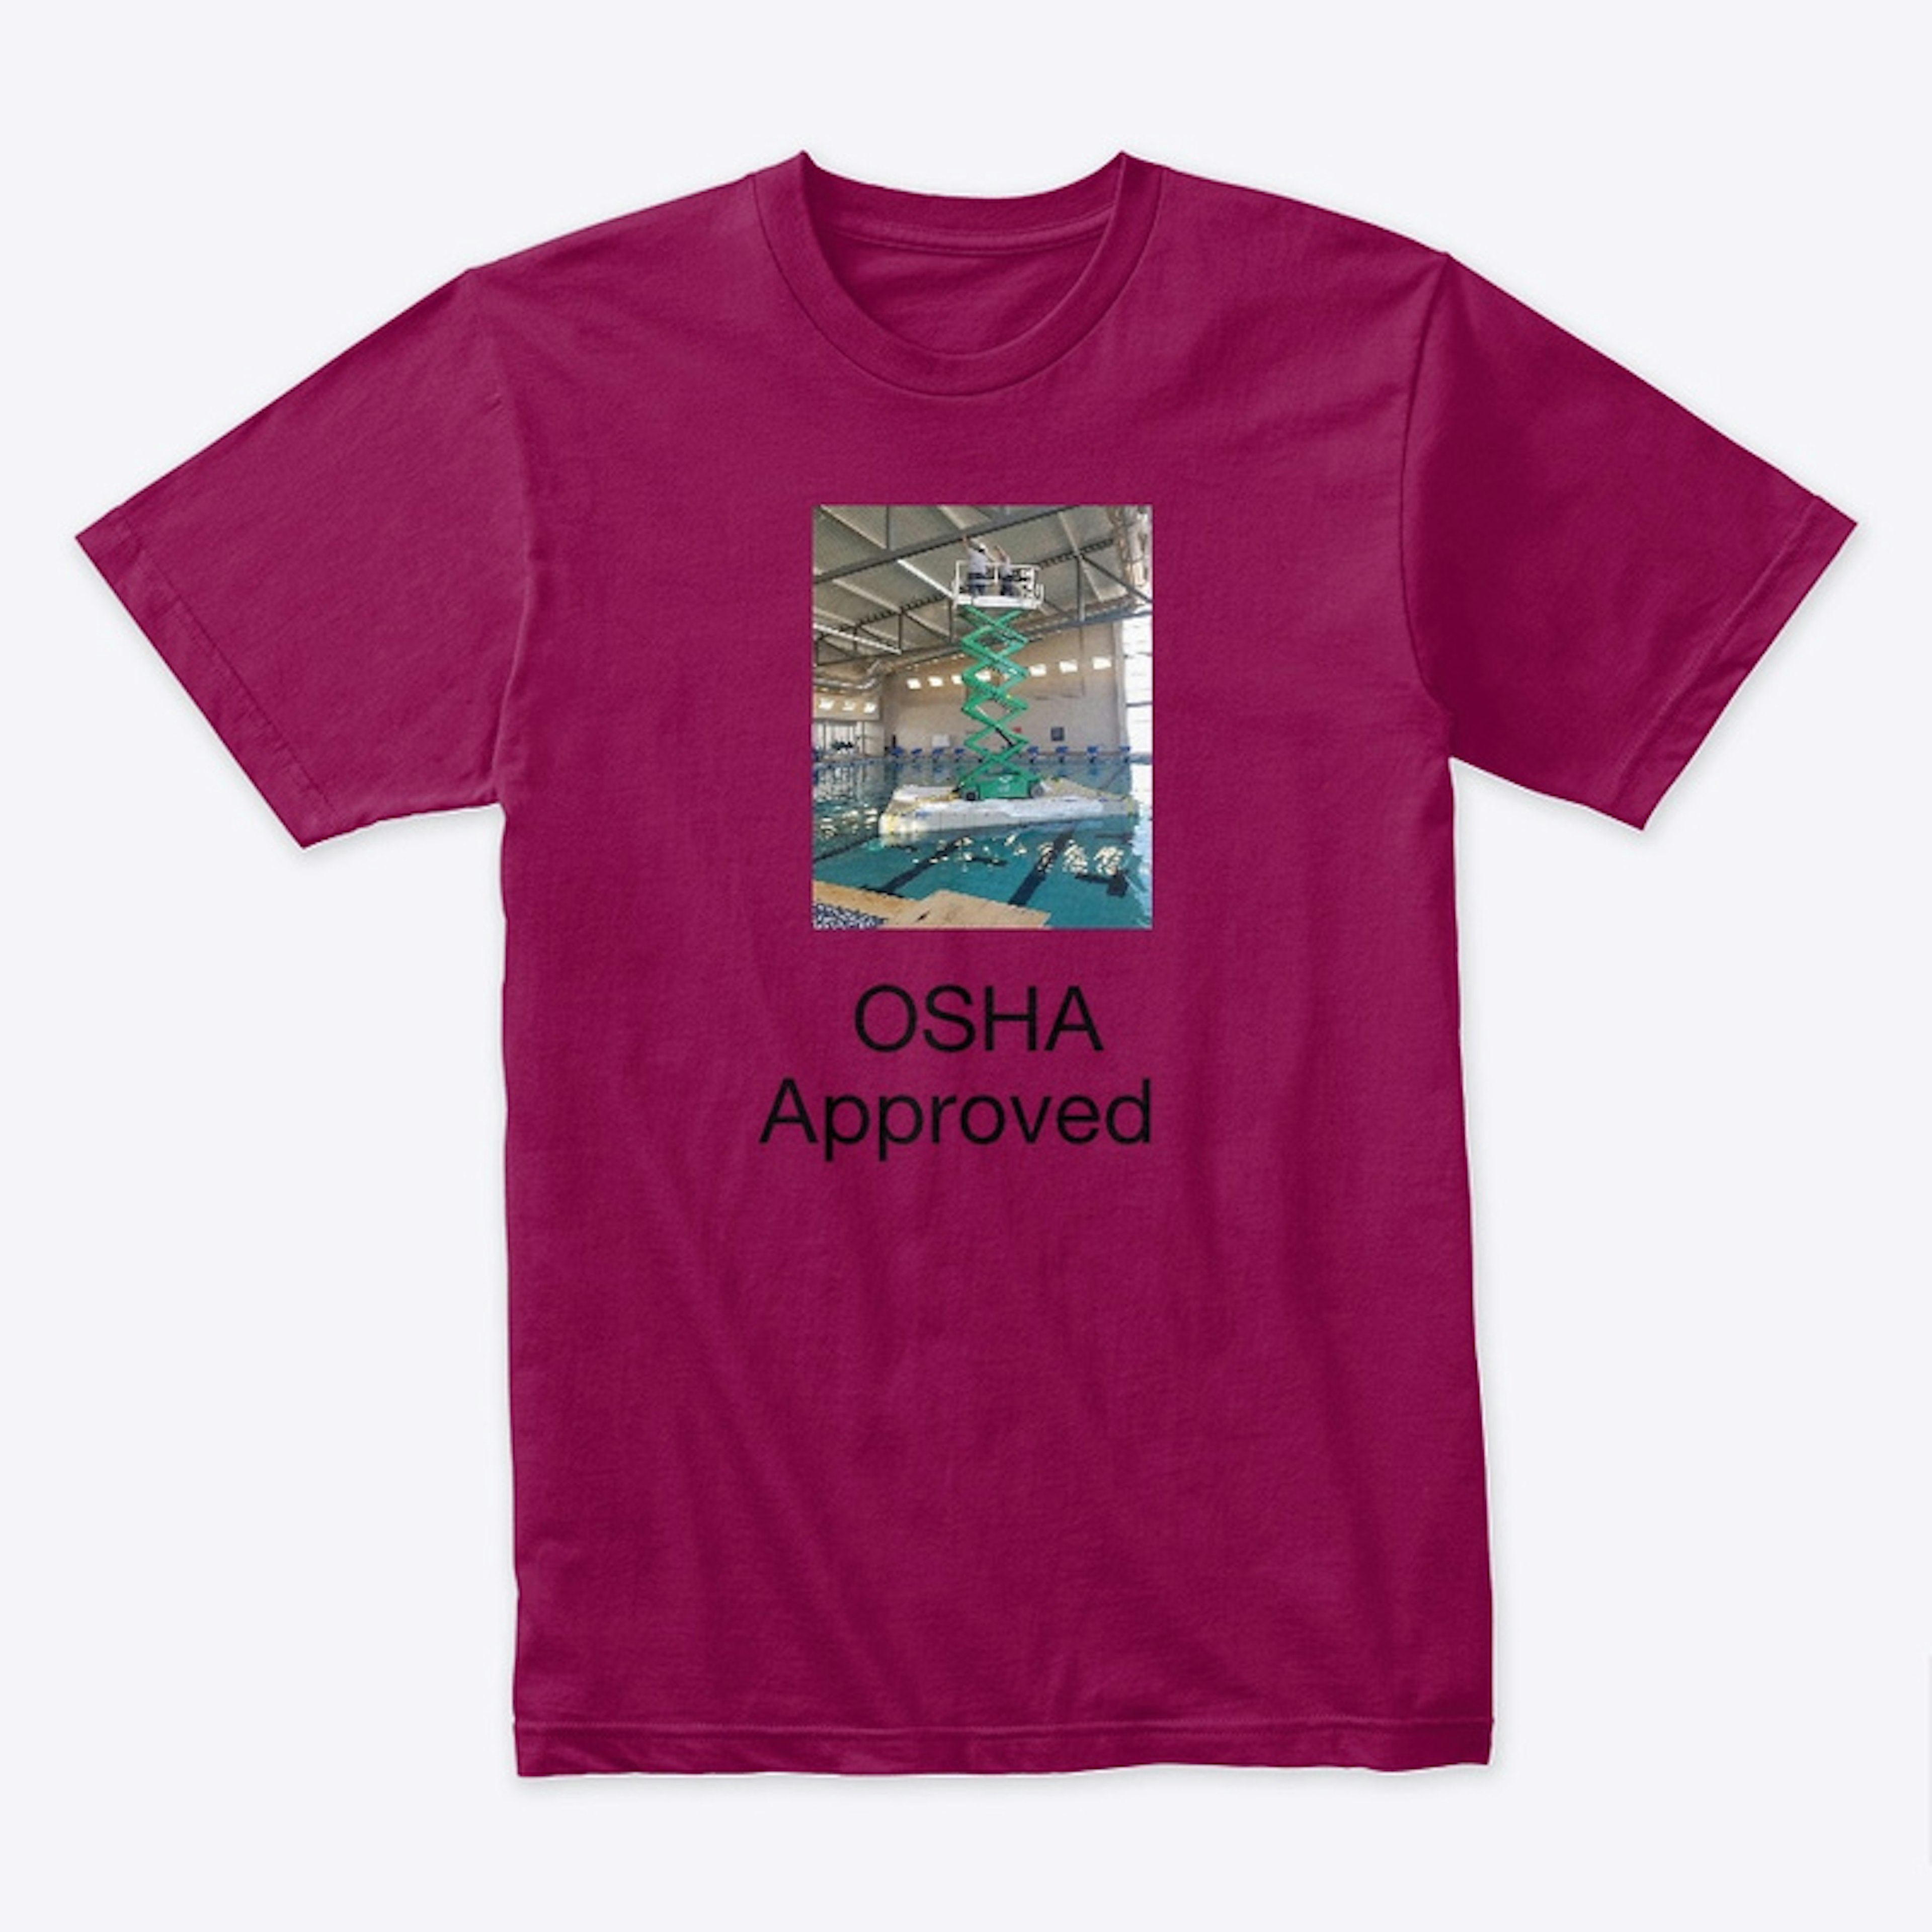 OSHA approved